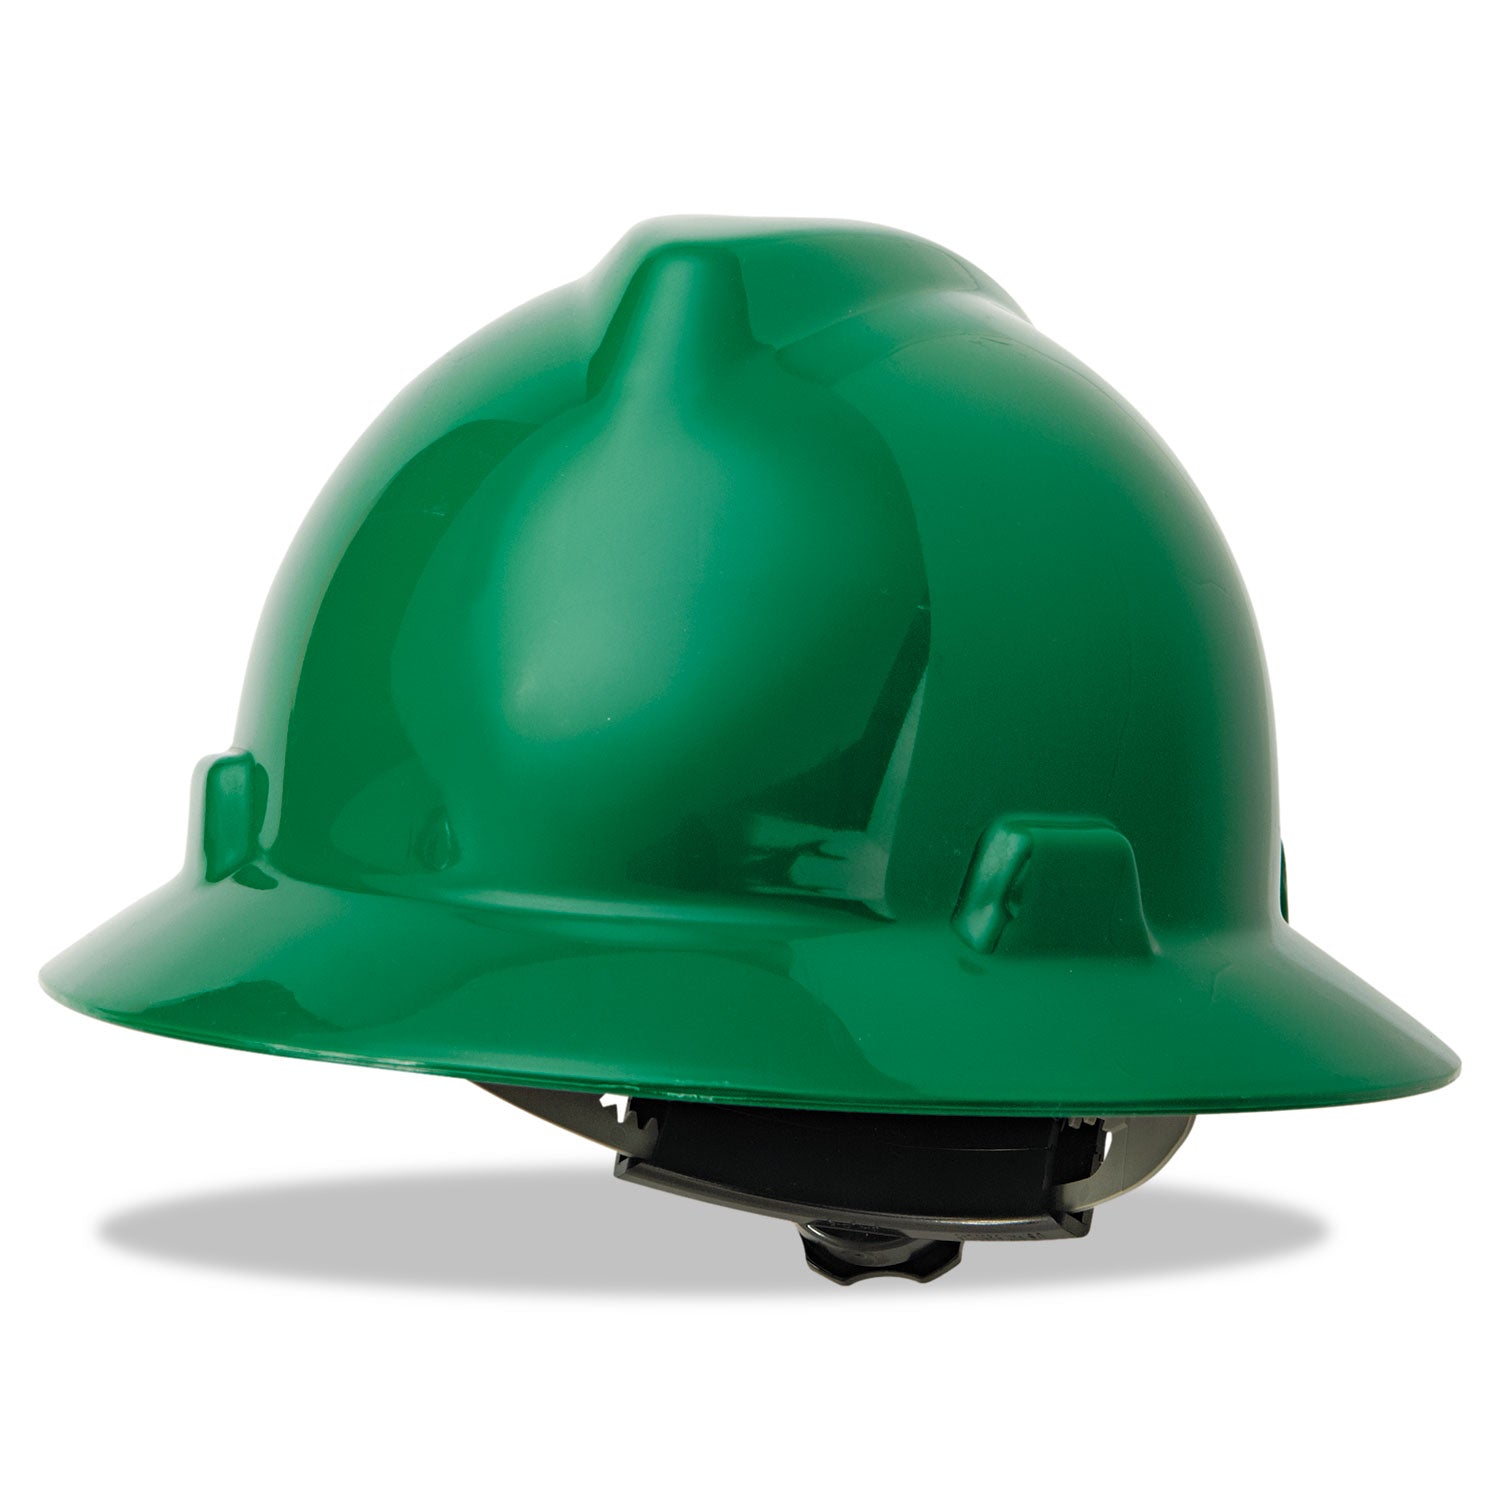 V-Gard Full-Brim Hard Hats, Ratchet Suspension, Size 6.5 to 8, Green - 